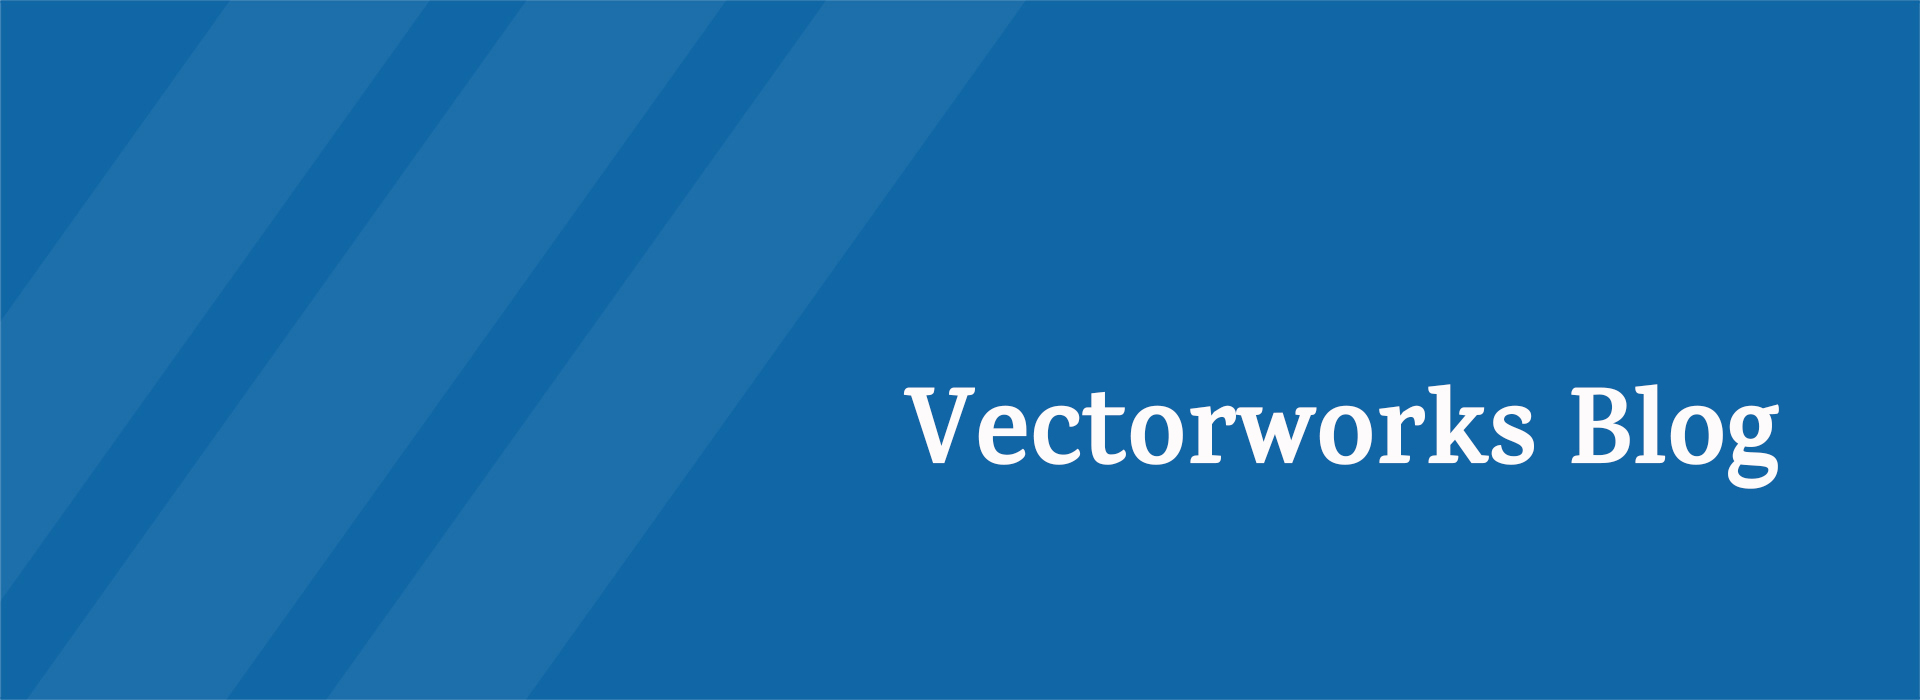 Vectorworks Blog